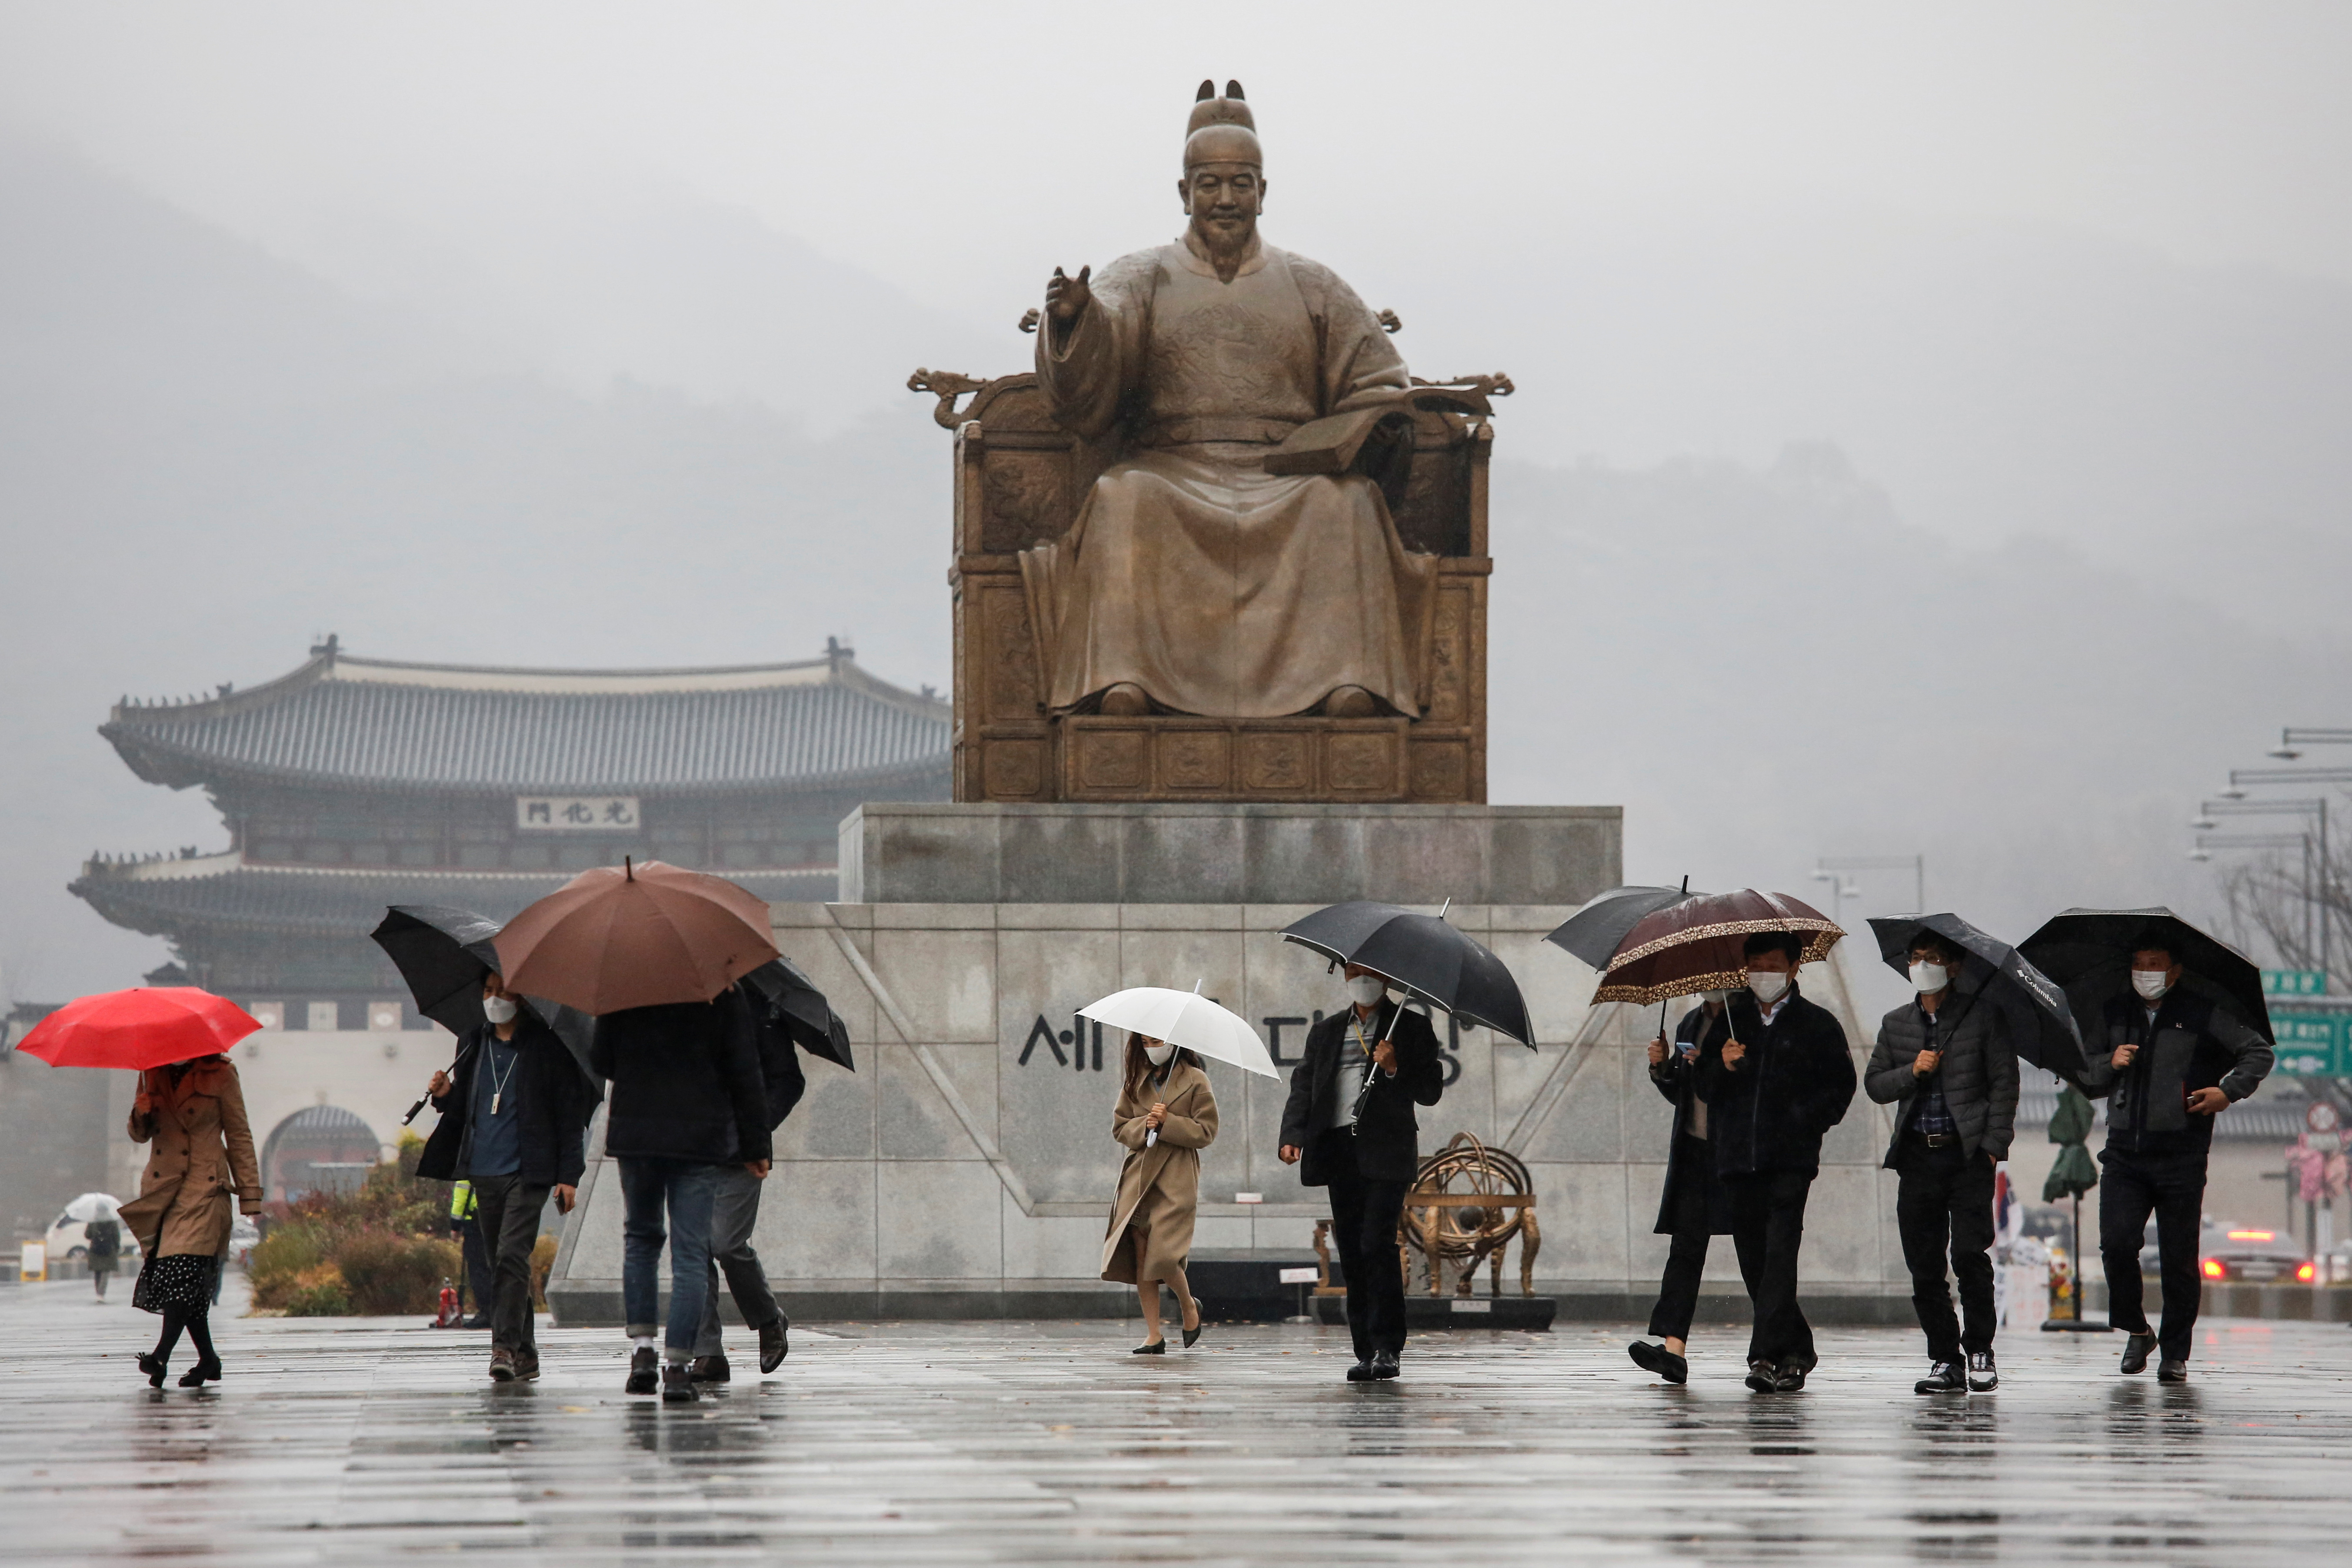 Pedestrians wearing masks walk with umbrellas as it rains amid the coronavirus disease (COVID-19) pandemic in central Seoul